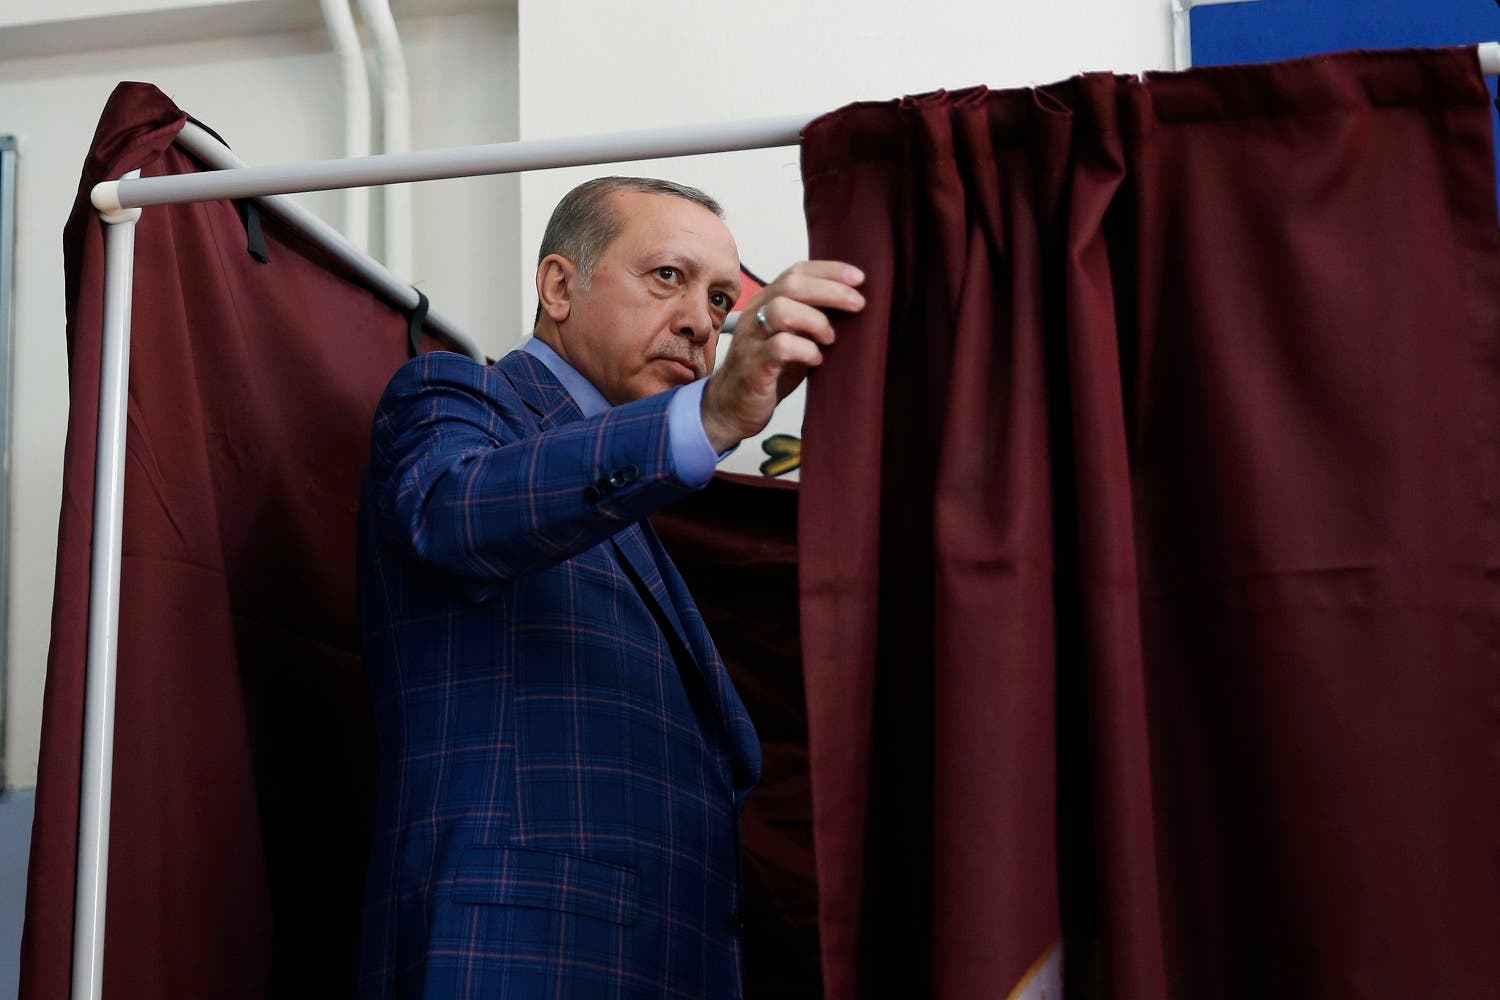 Turkey’s President Recep Tayyip Erdogan enters a voting booth inside a polling station in Istanbul, Turkey, on Sunday, April 16, 2017 (Photo: AP/Lefteris Pitarakis)